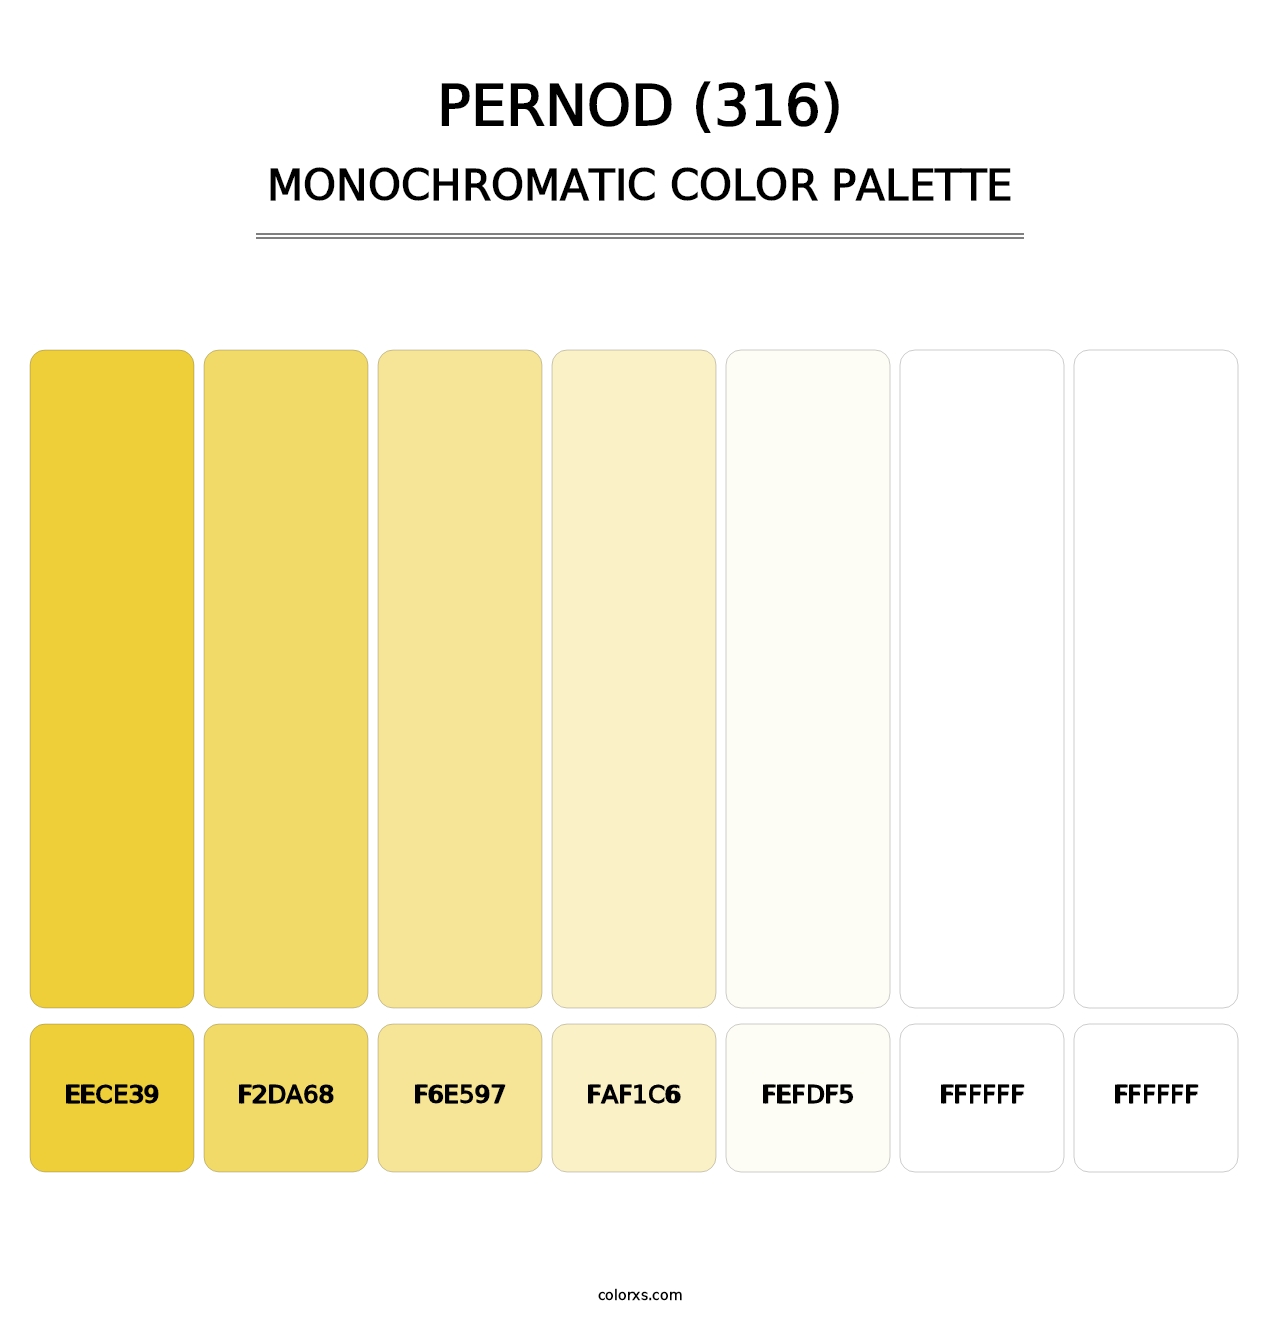 Pernod (316) - Monochromatic Color Palette